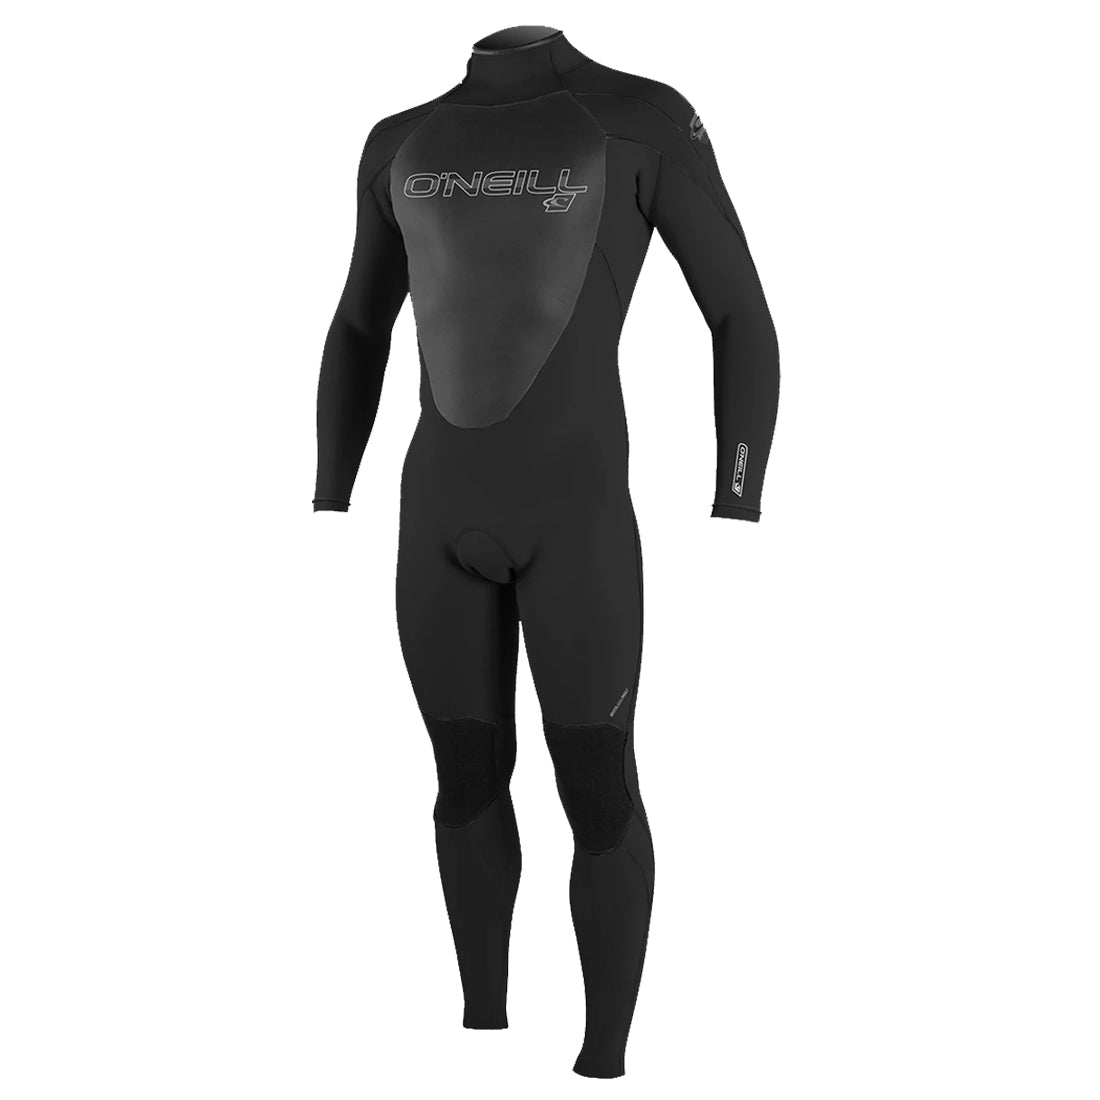 BorBorNa Wetsuit Full Body 3mm Neoprene Diving Suit Men Women with